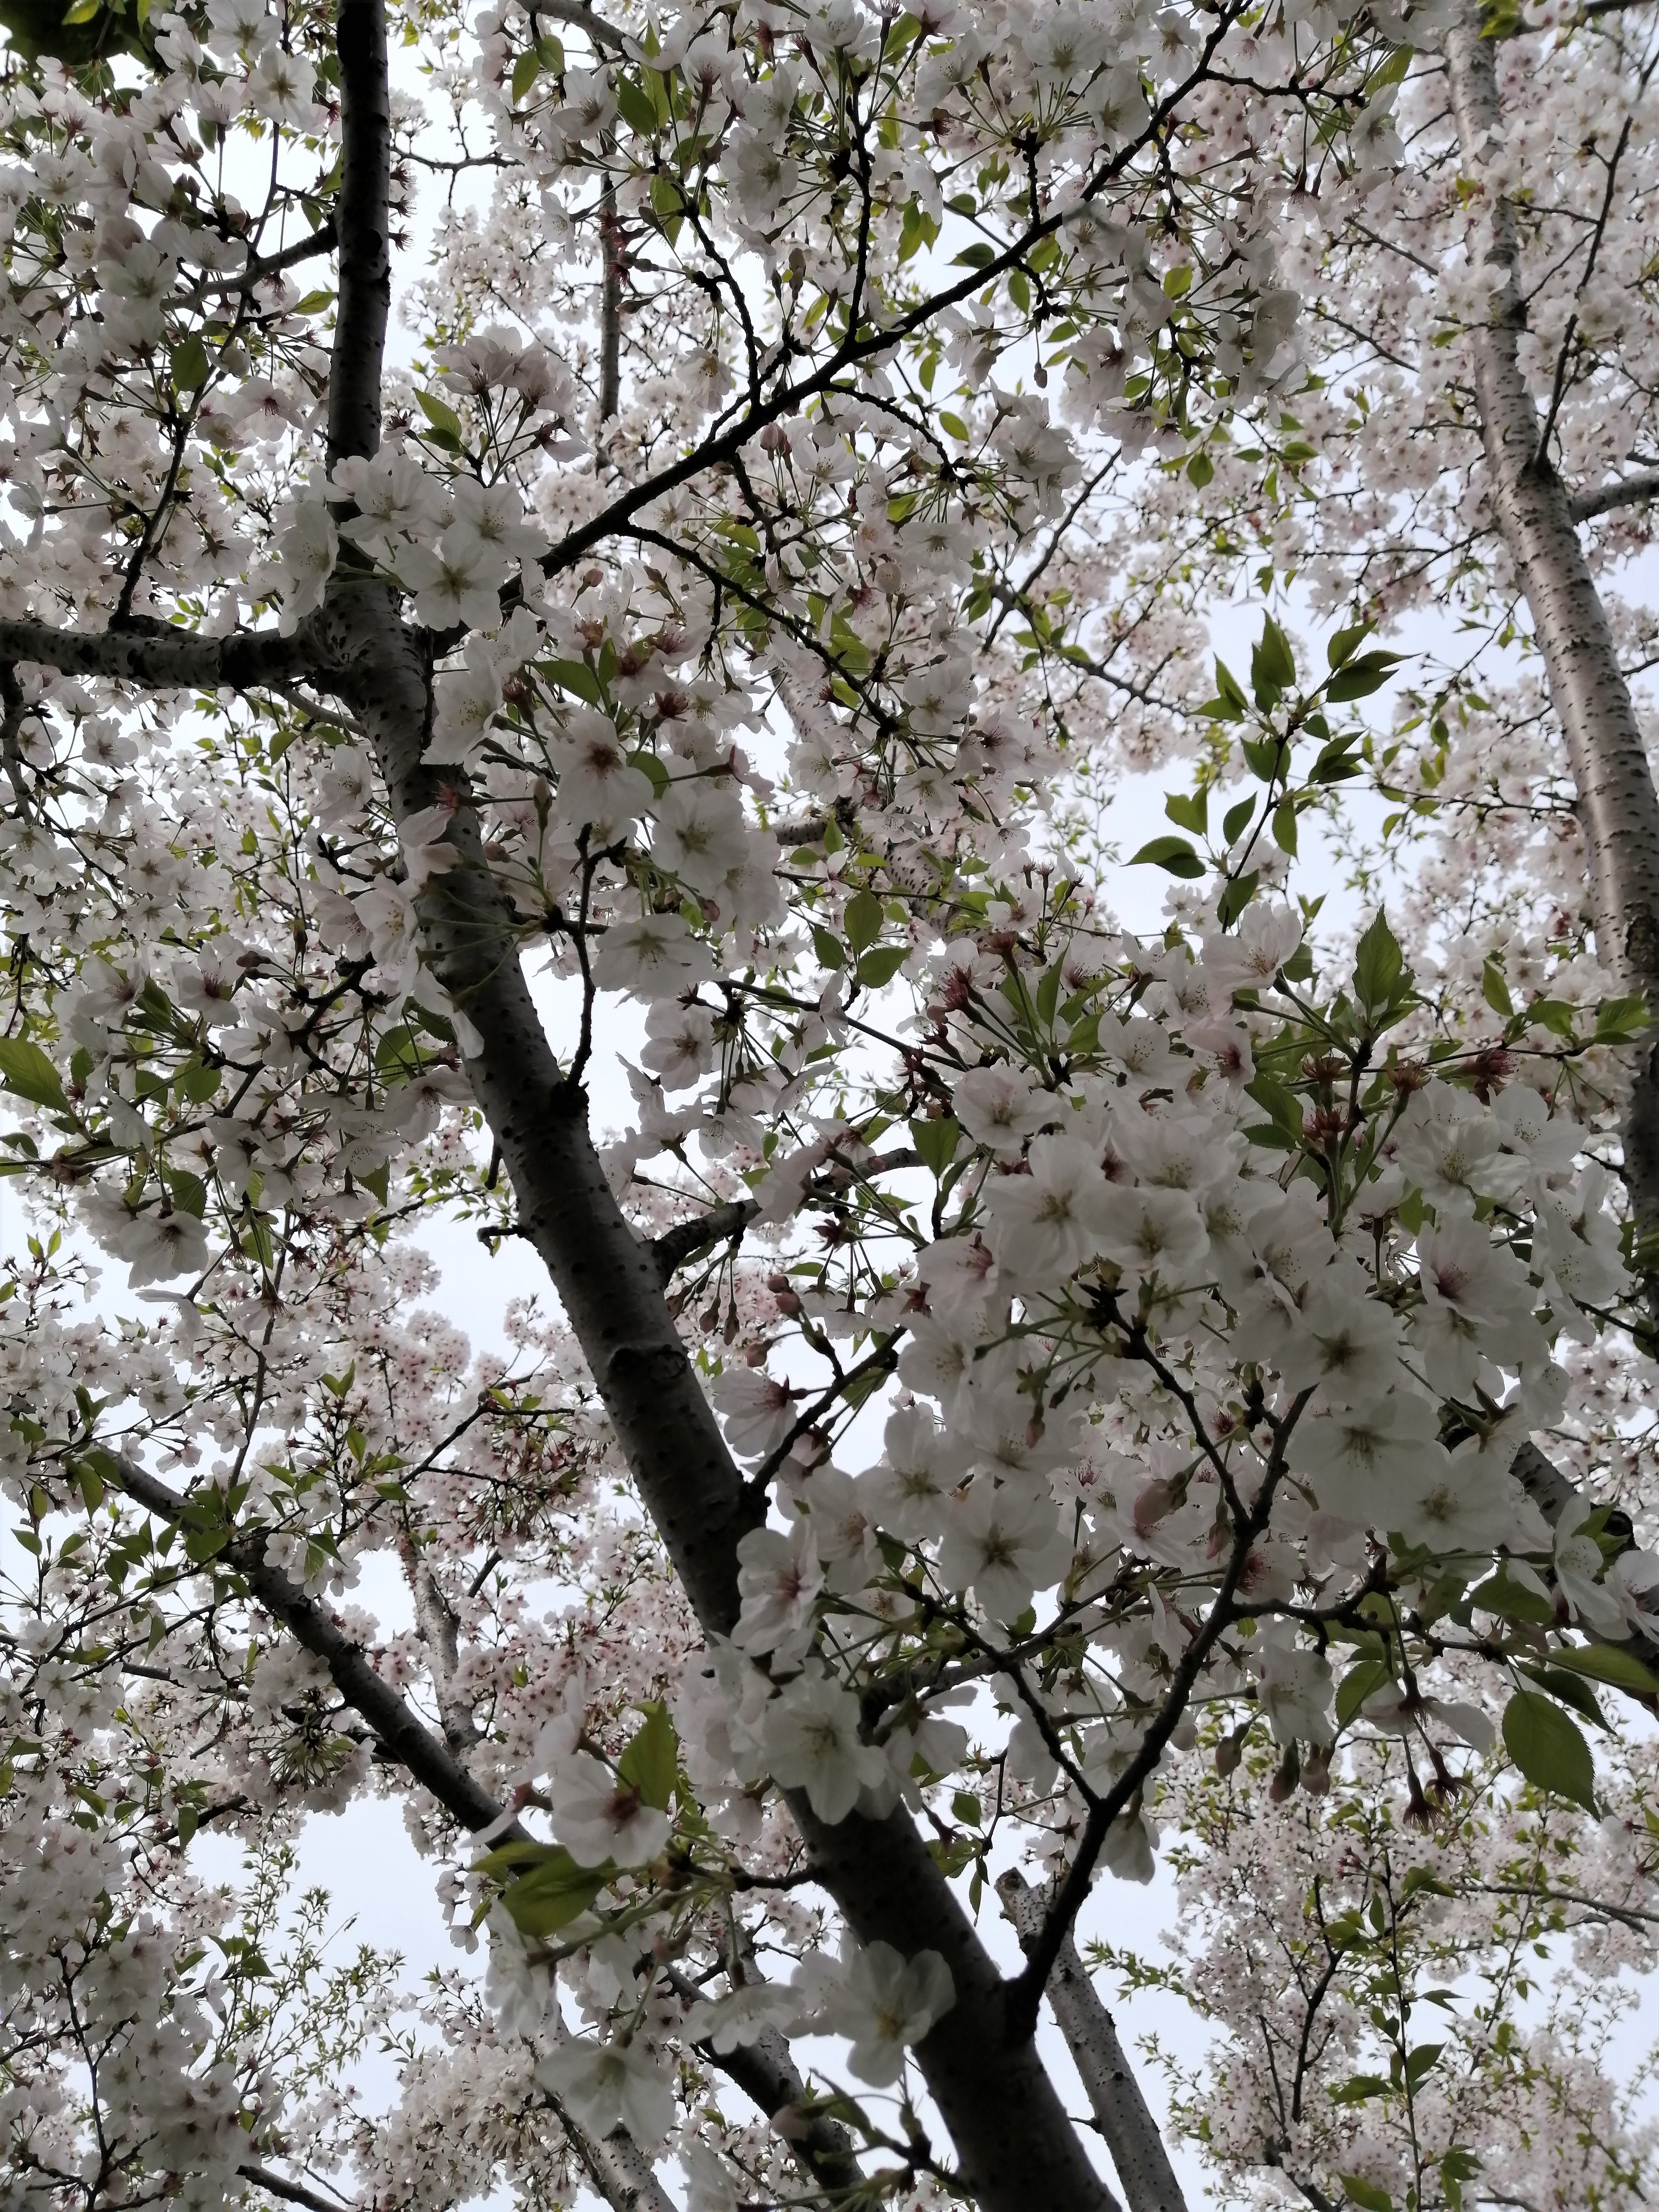 Walk among the blossoms